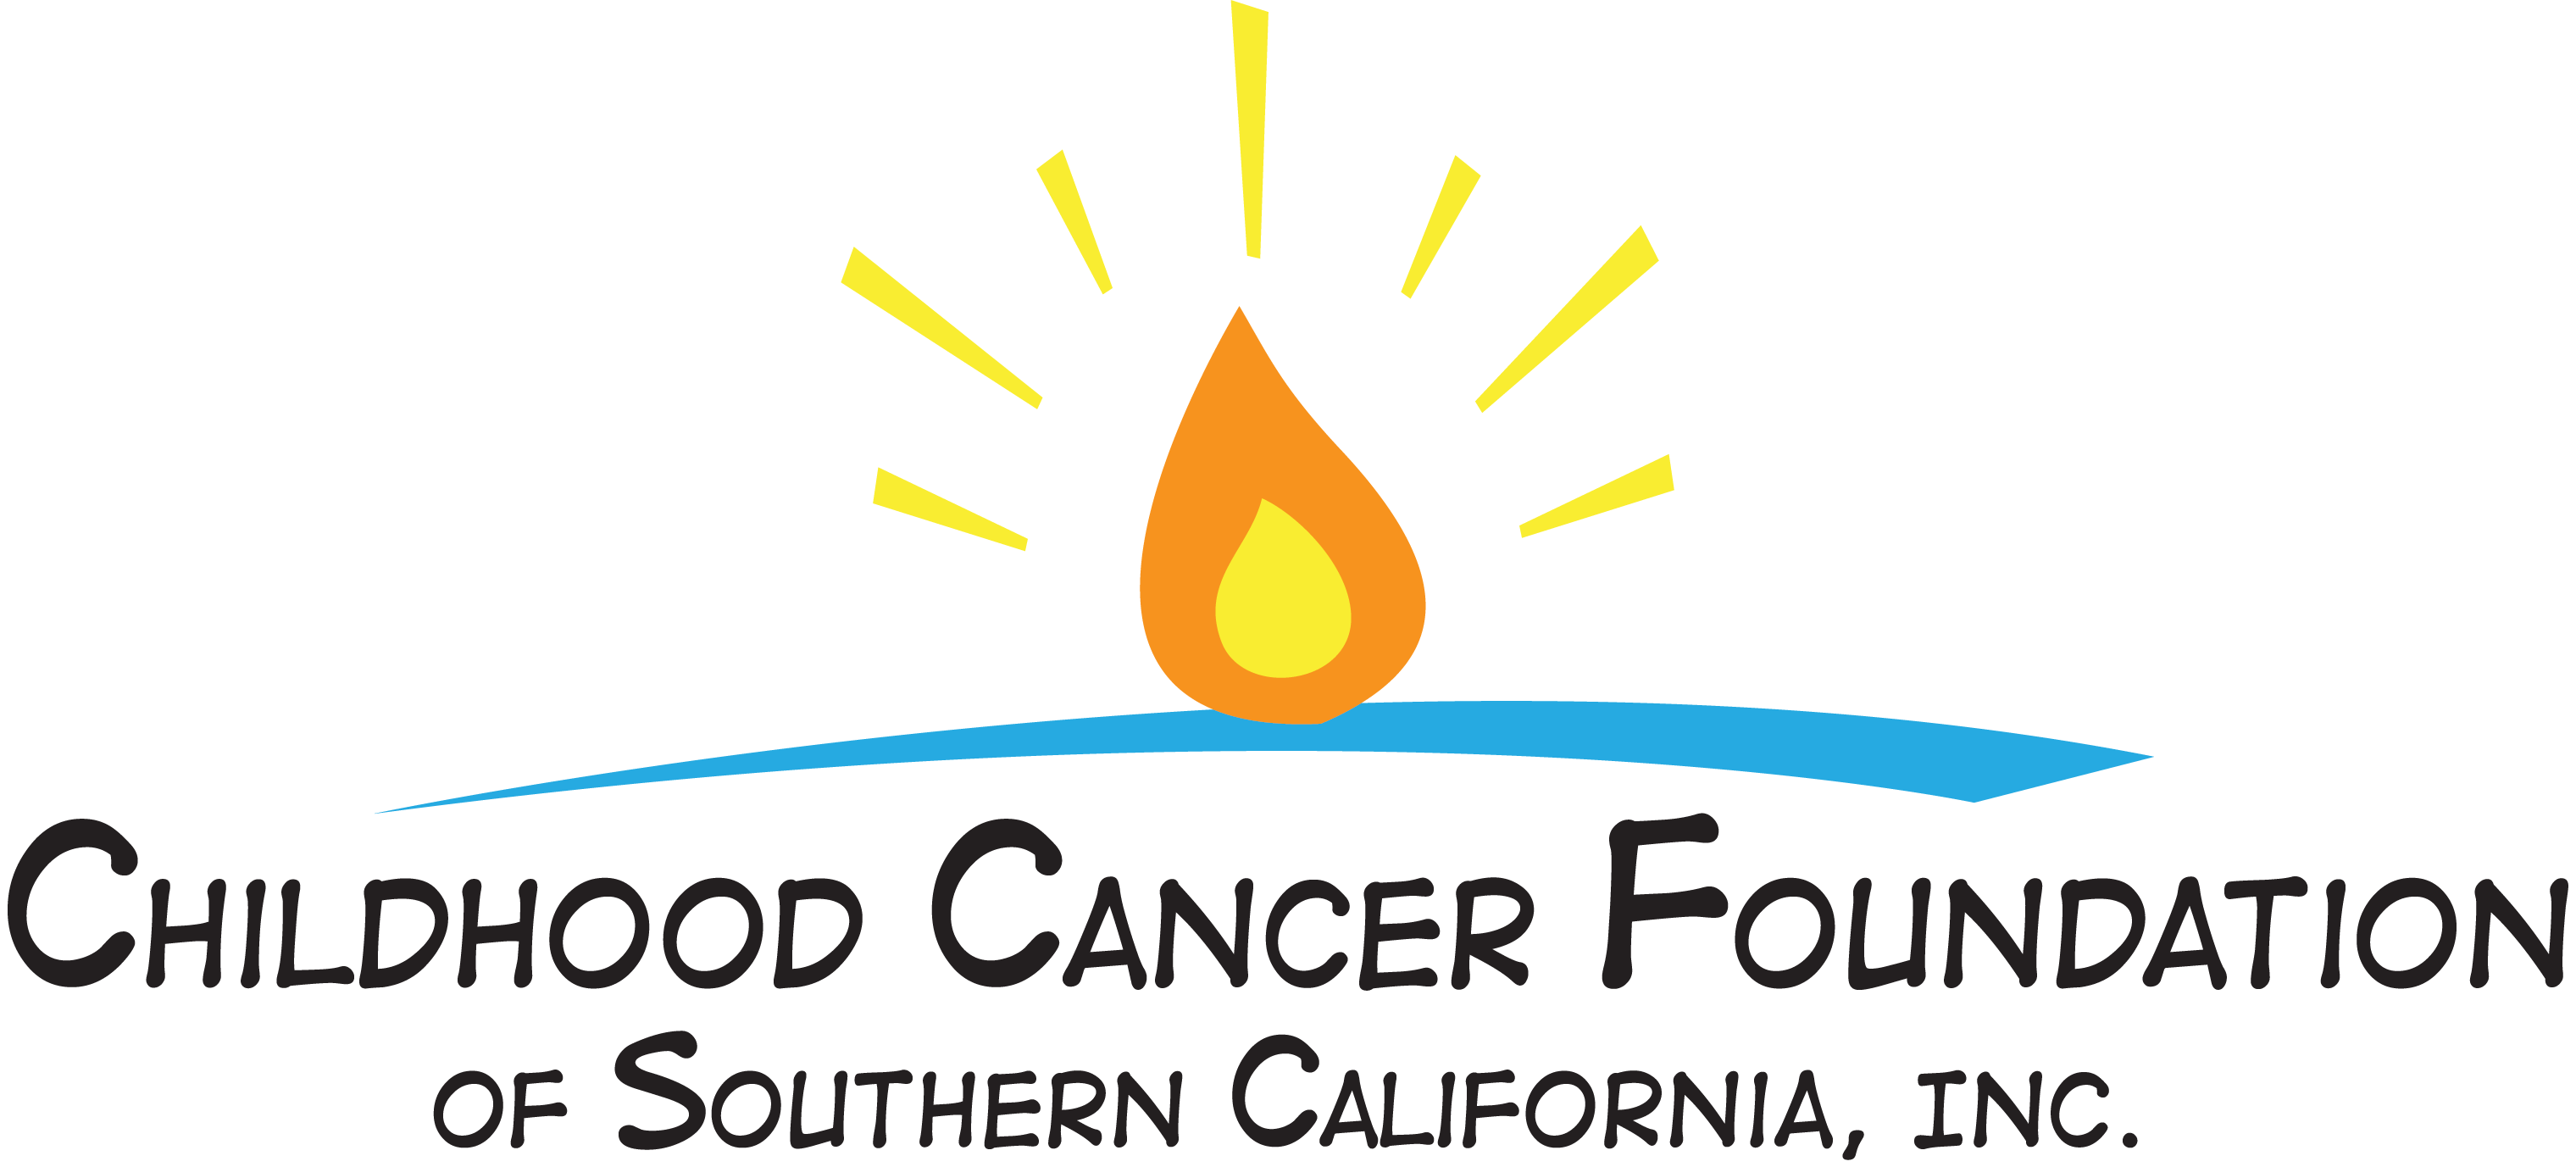 Childhood Cancer Foundation of Southern California, Inc. logo